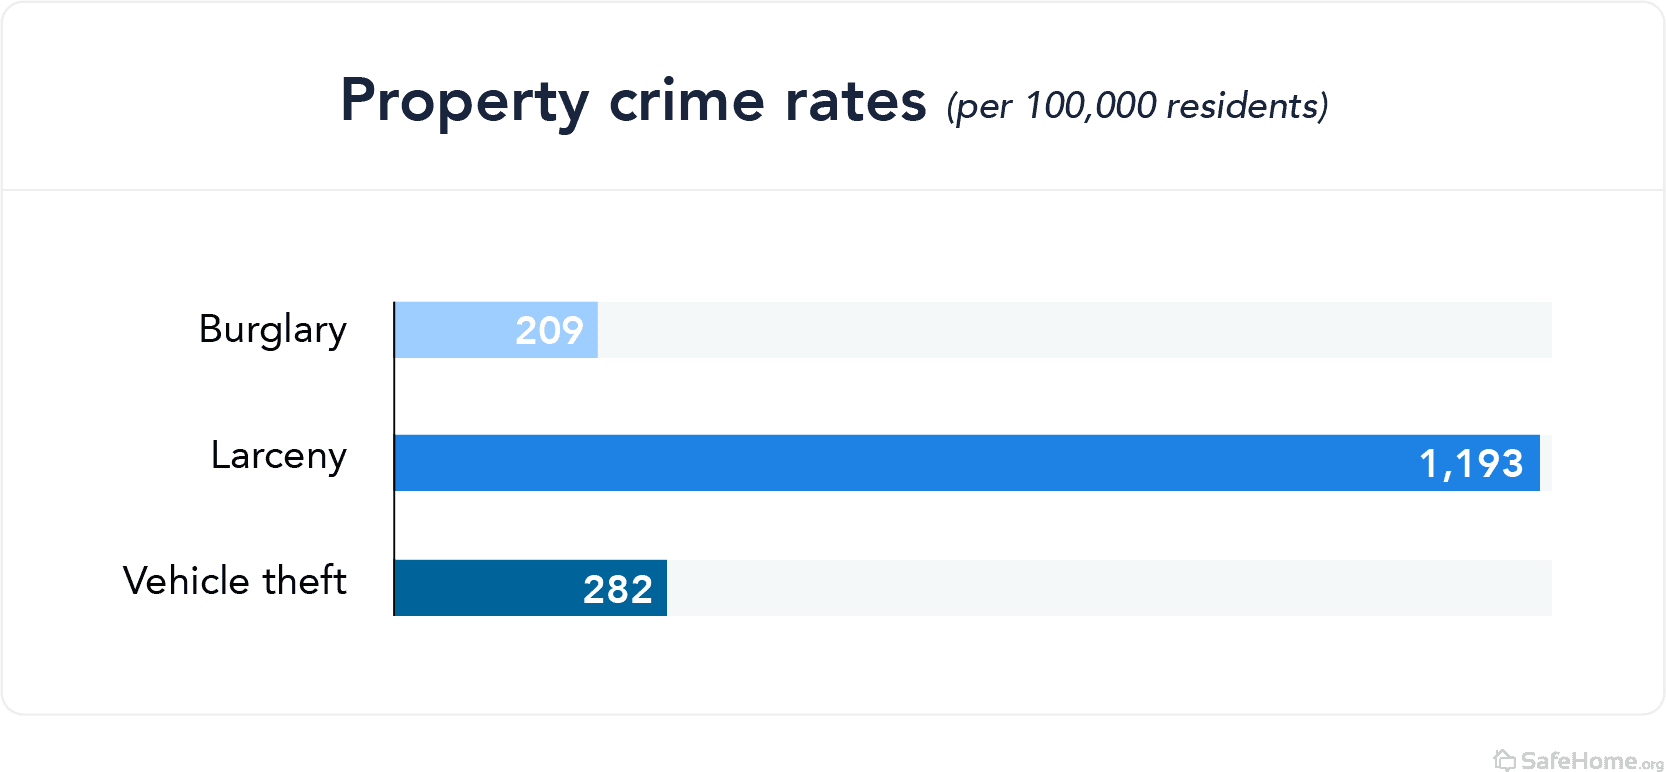 Illinois property crime rates